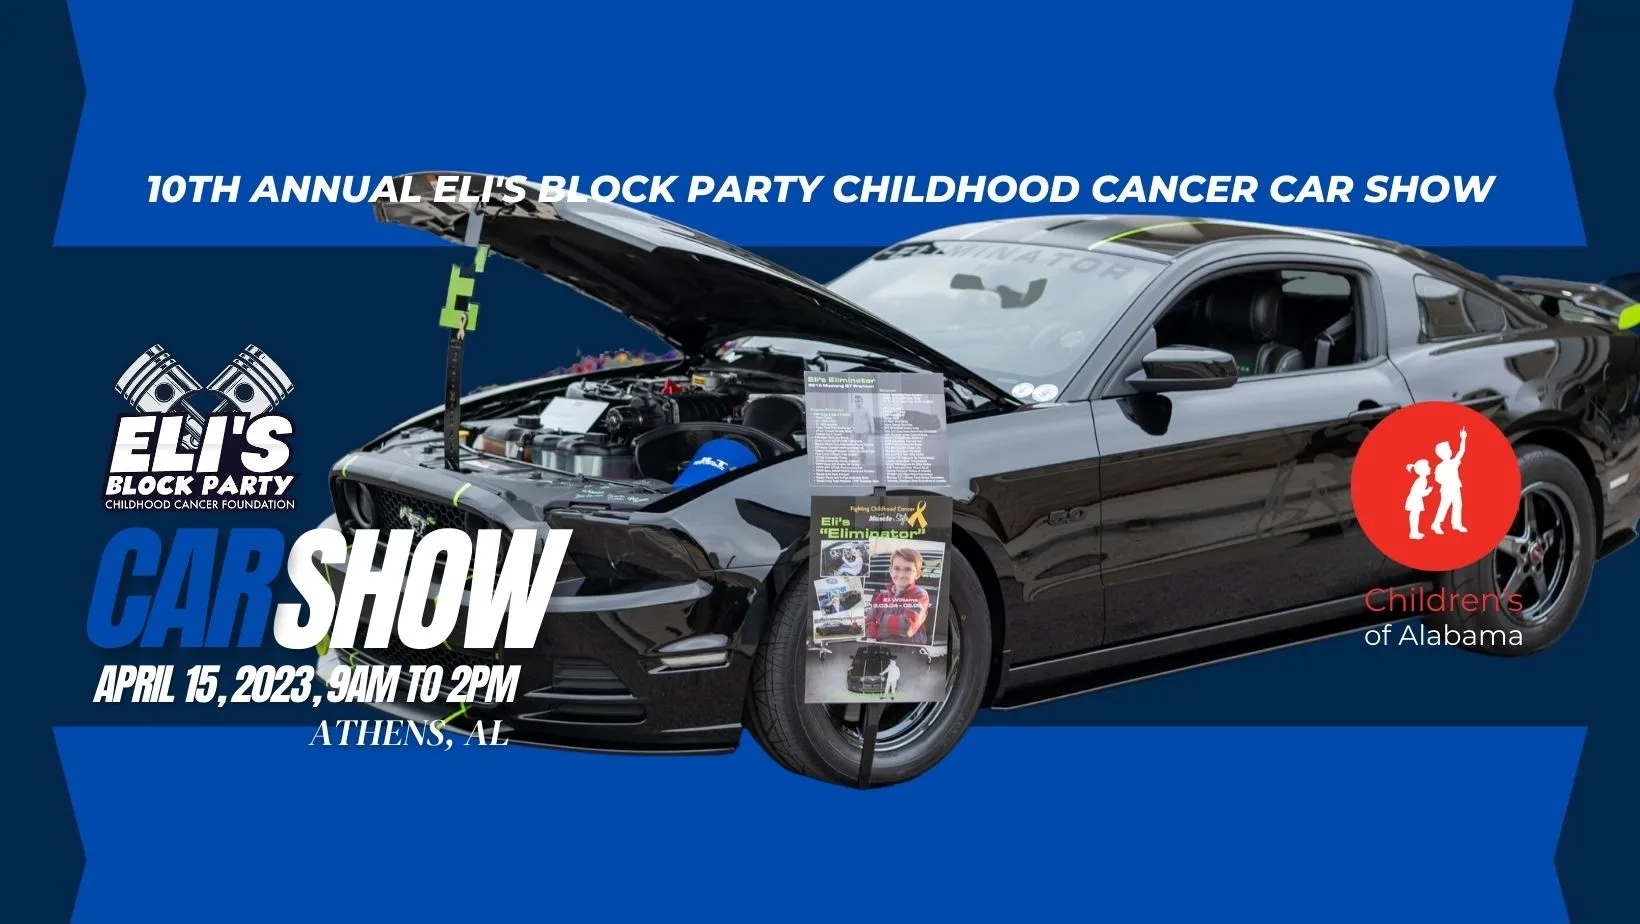 Eli's Block Party Childhood Cancer Car Show